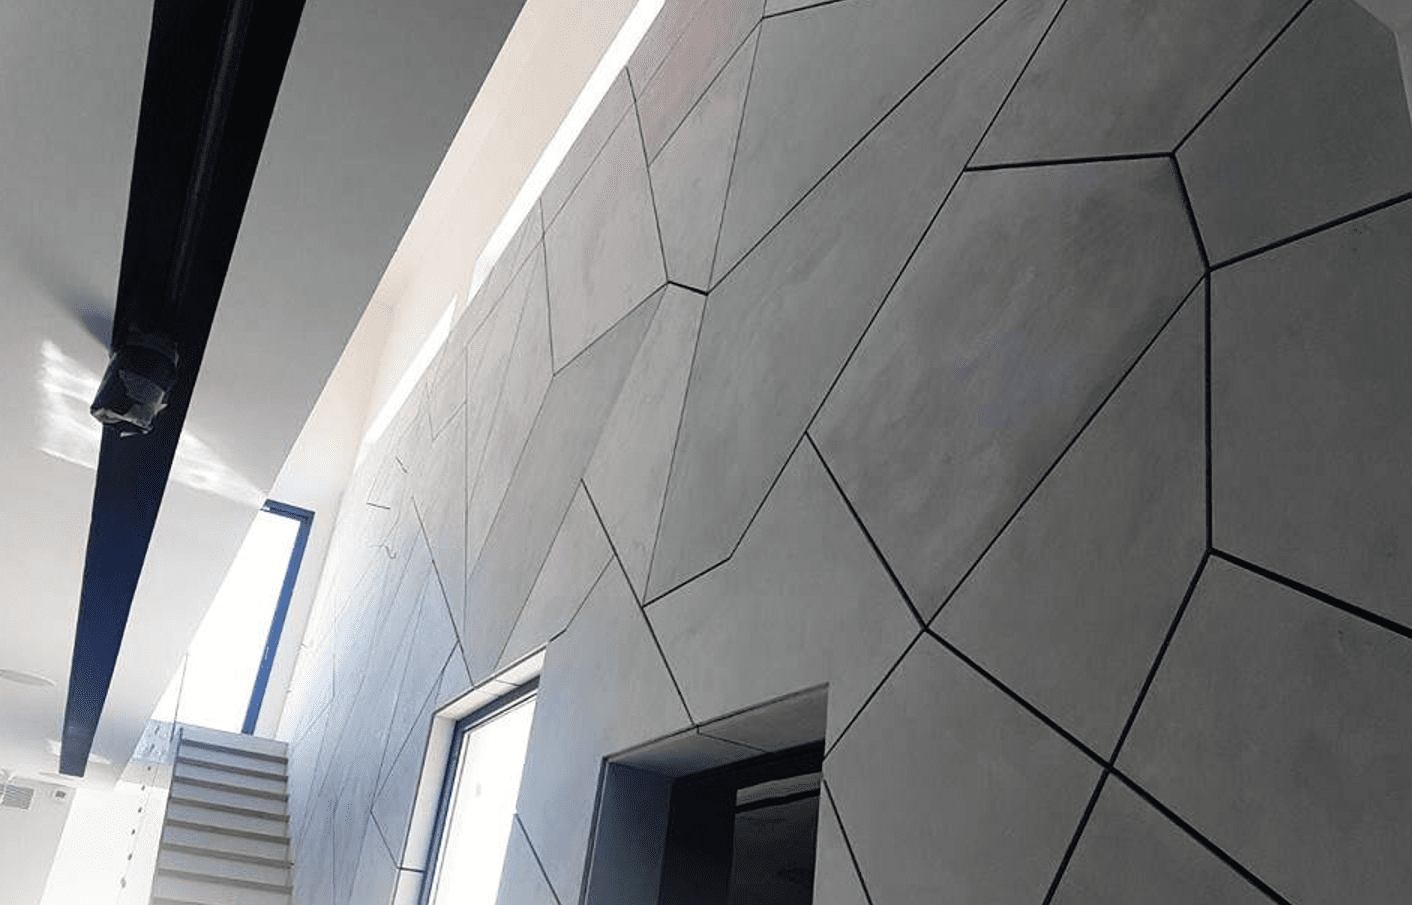 SHERA fibre cement board for interior or exterior wall applications